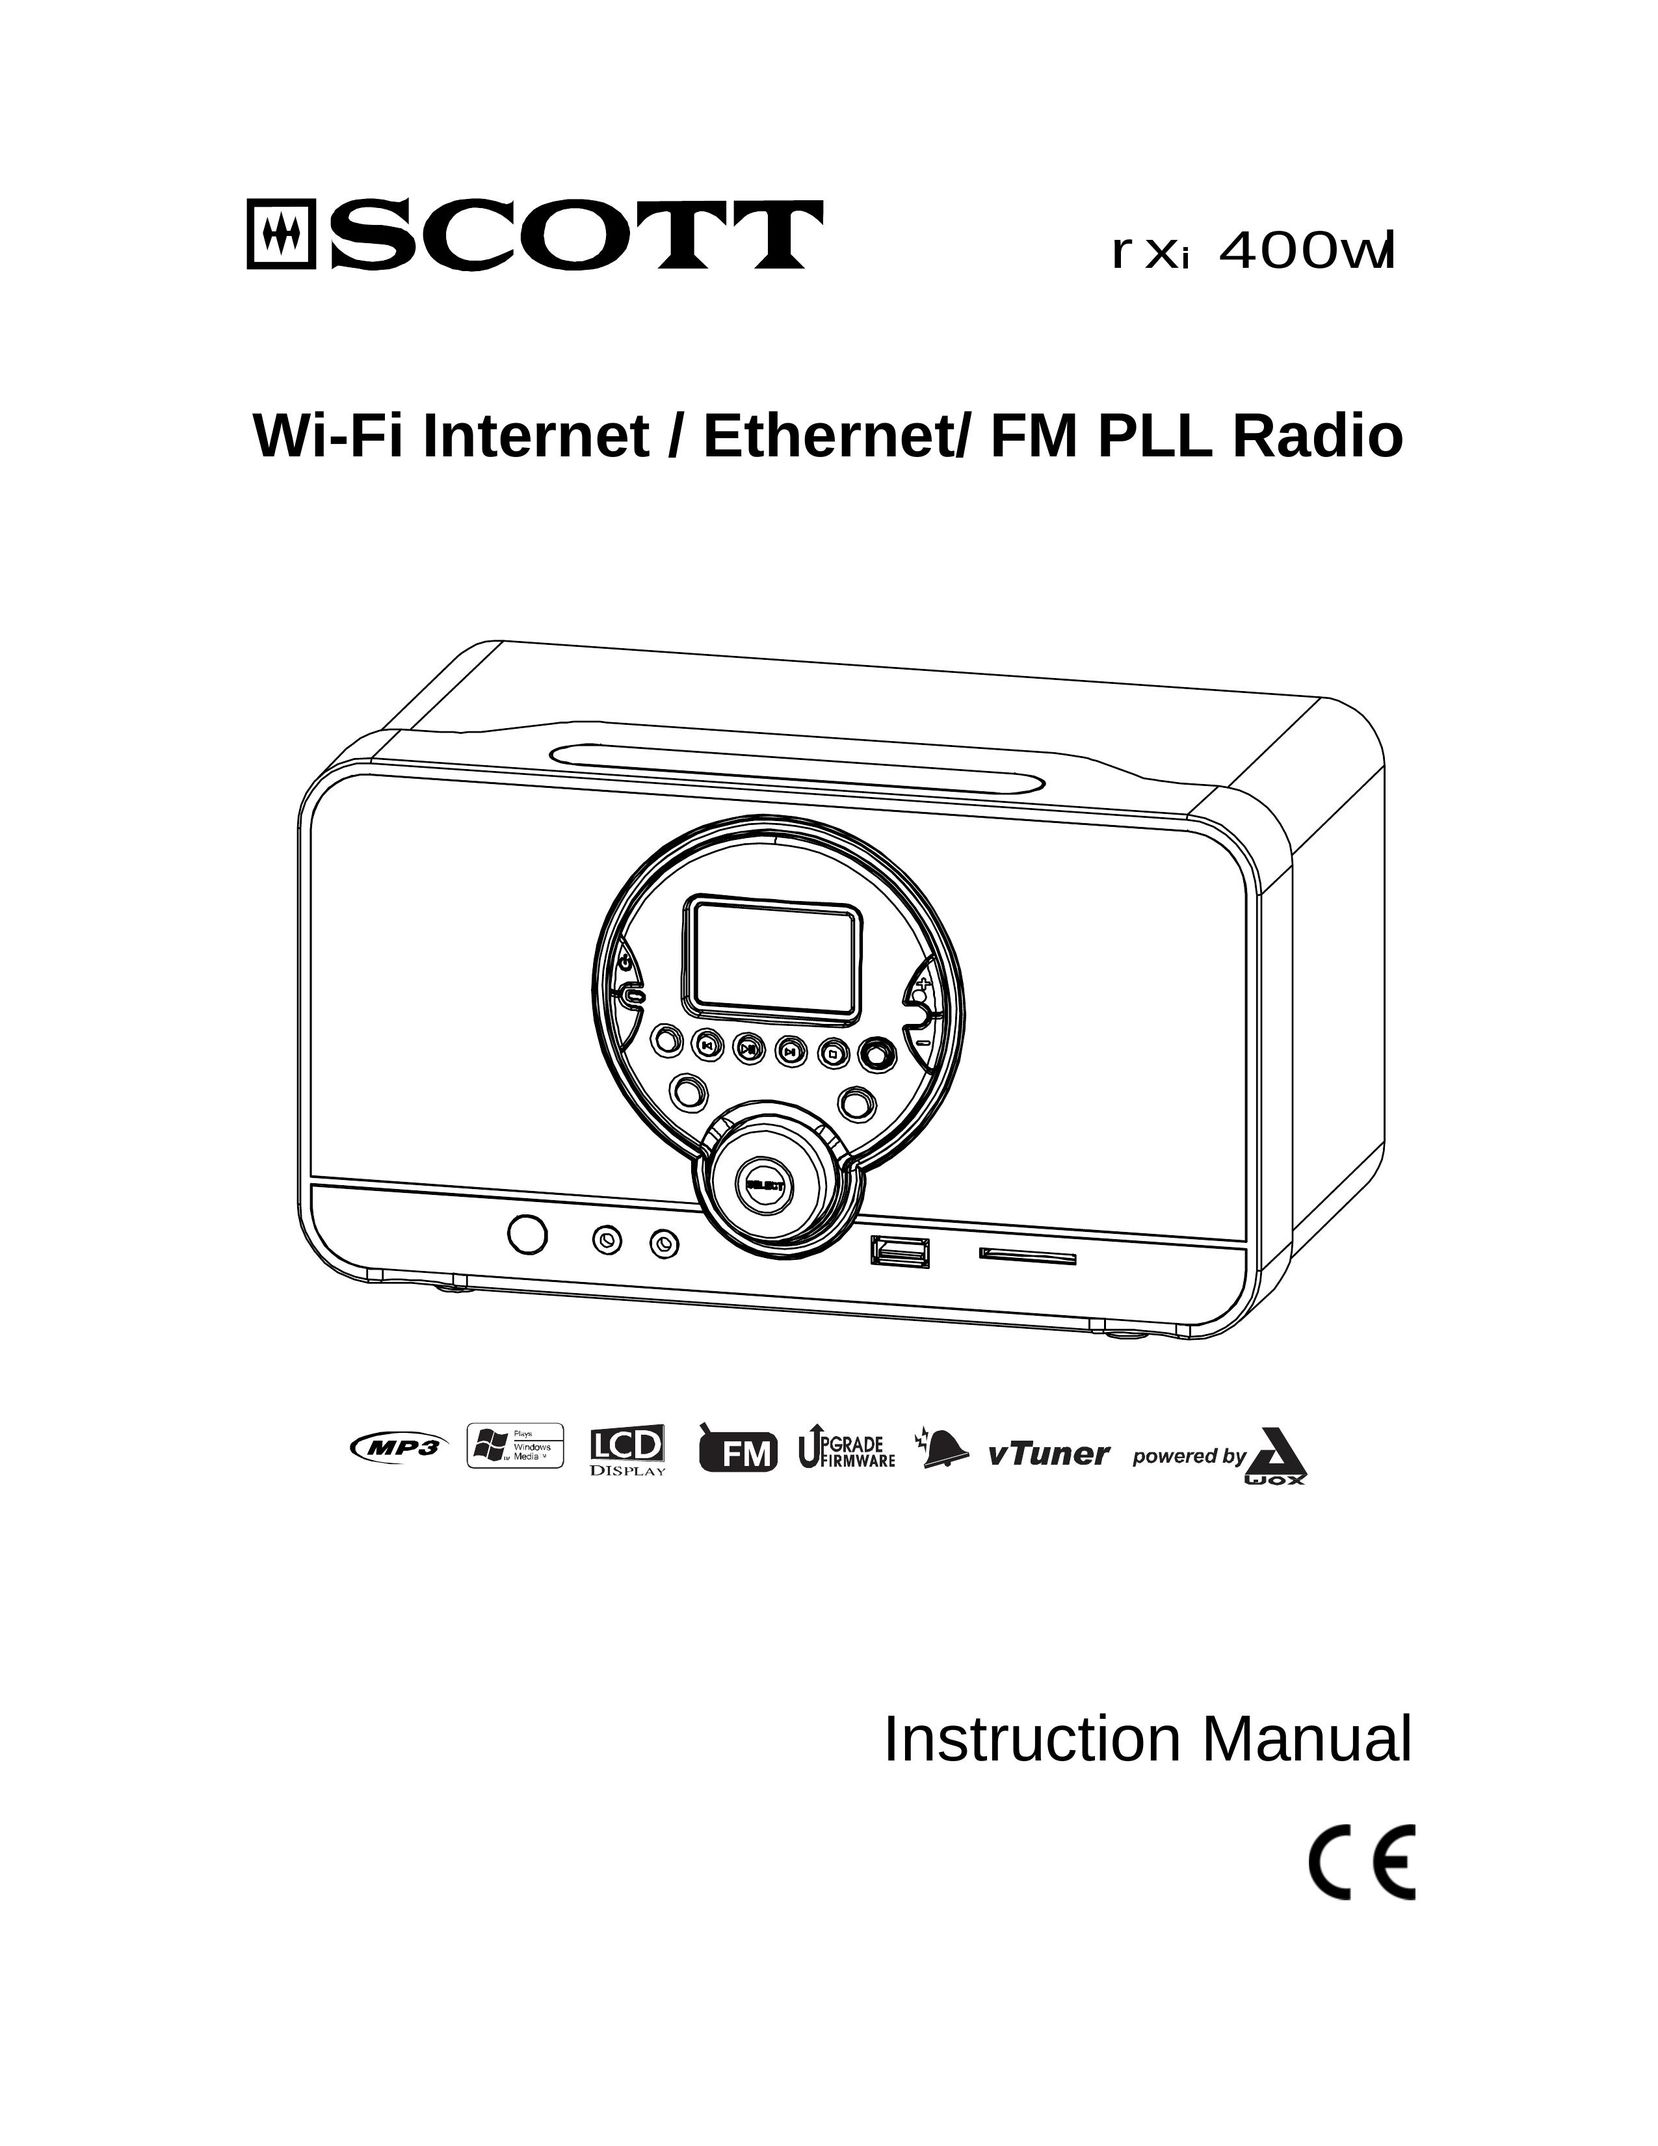 Scott r x 400wl Network Router User Manual